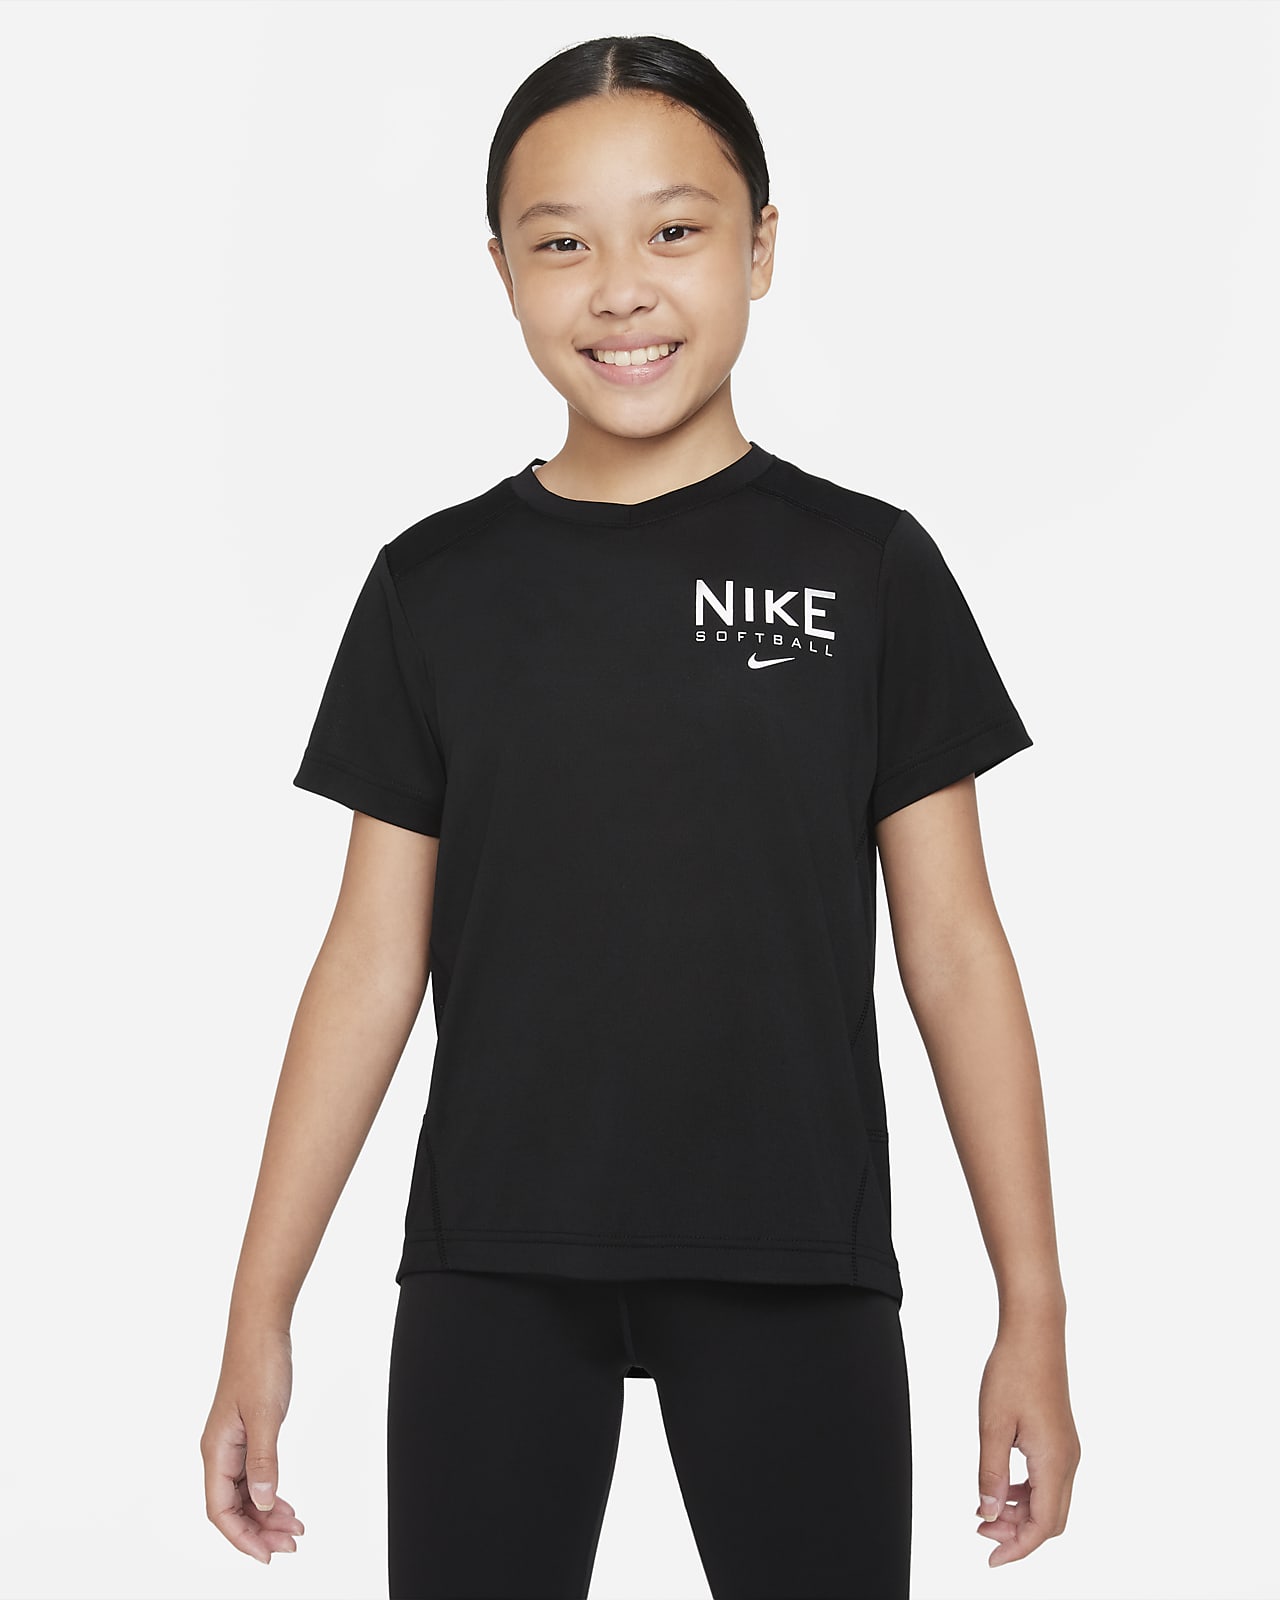 Top. Practice Kids\' Short-Sleeve Dri-FIT Big (Girls\') Nike Softball